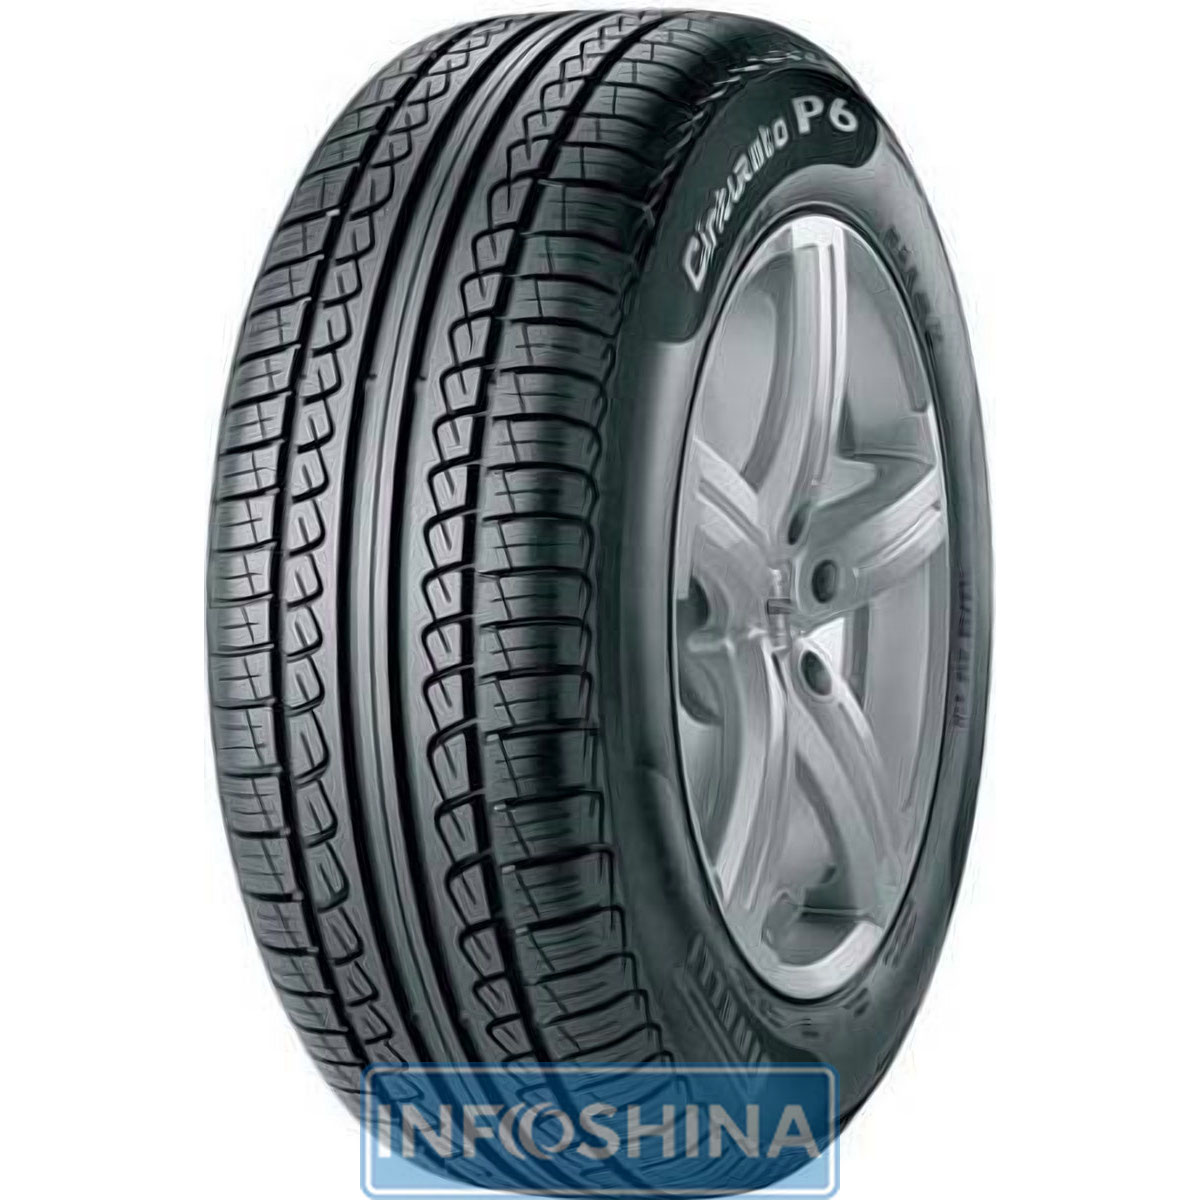 Купить шины Pirelli Cinturato P6 215/60 R16 99H